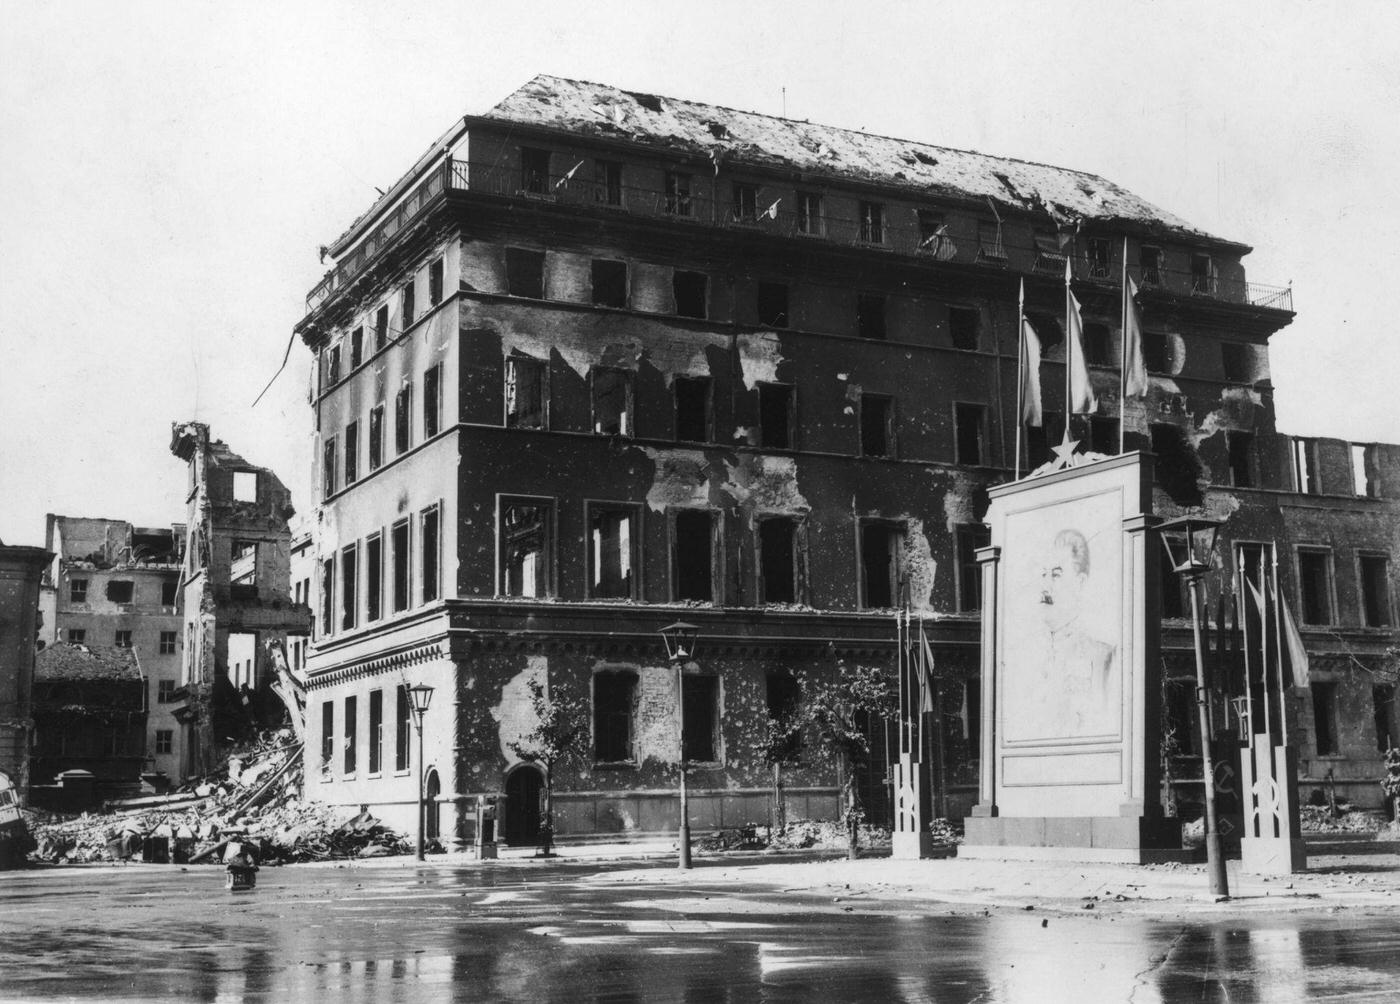 Shell of the Adlon Hotel in Unter den Linden, Berlin, still standing but windowless, 1945.